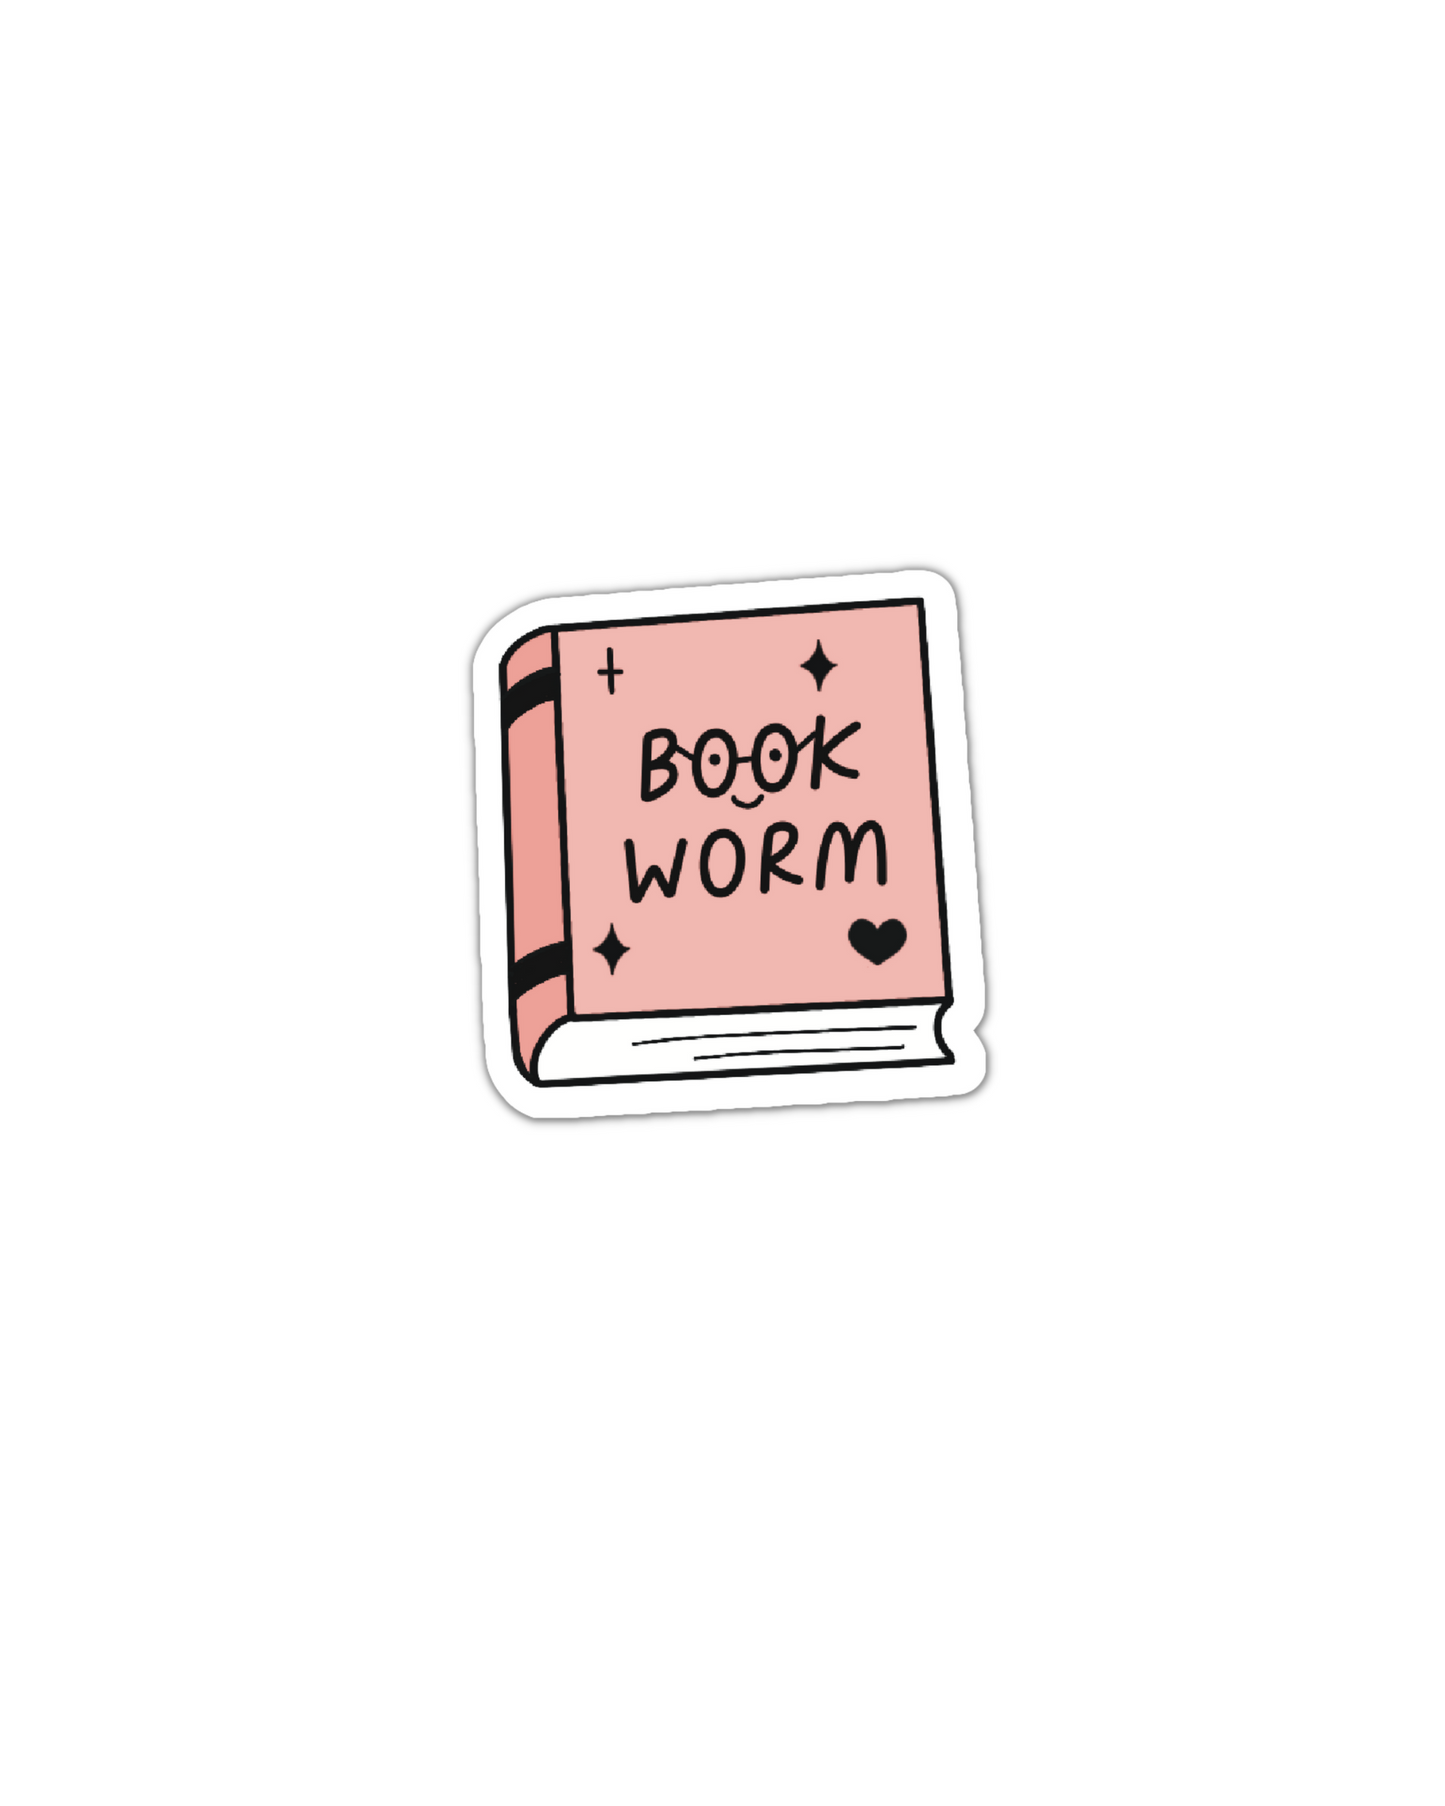 Bookworm reading vinyl sticker